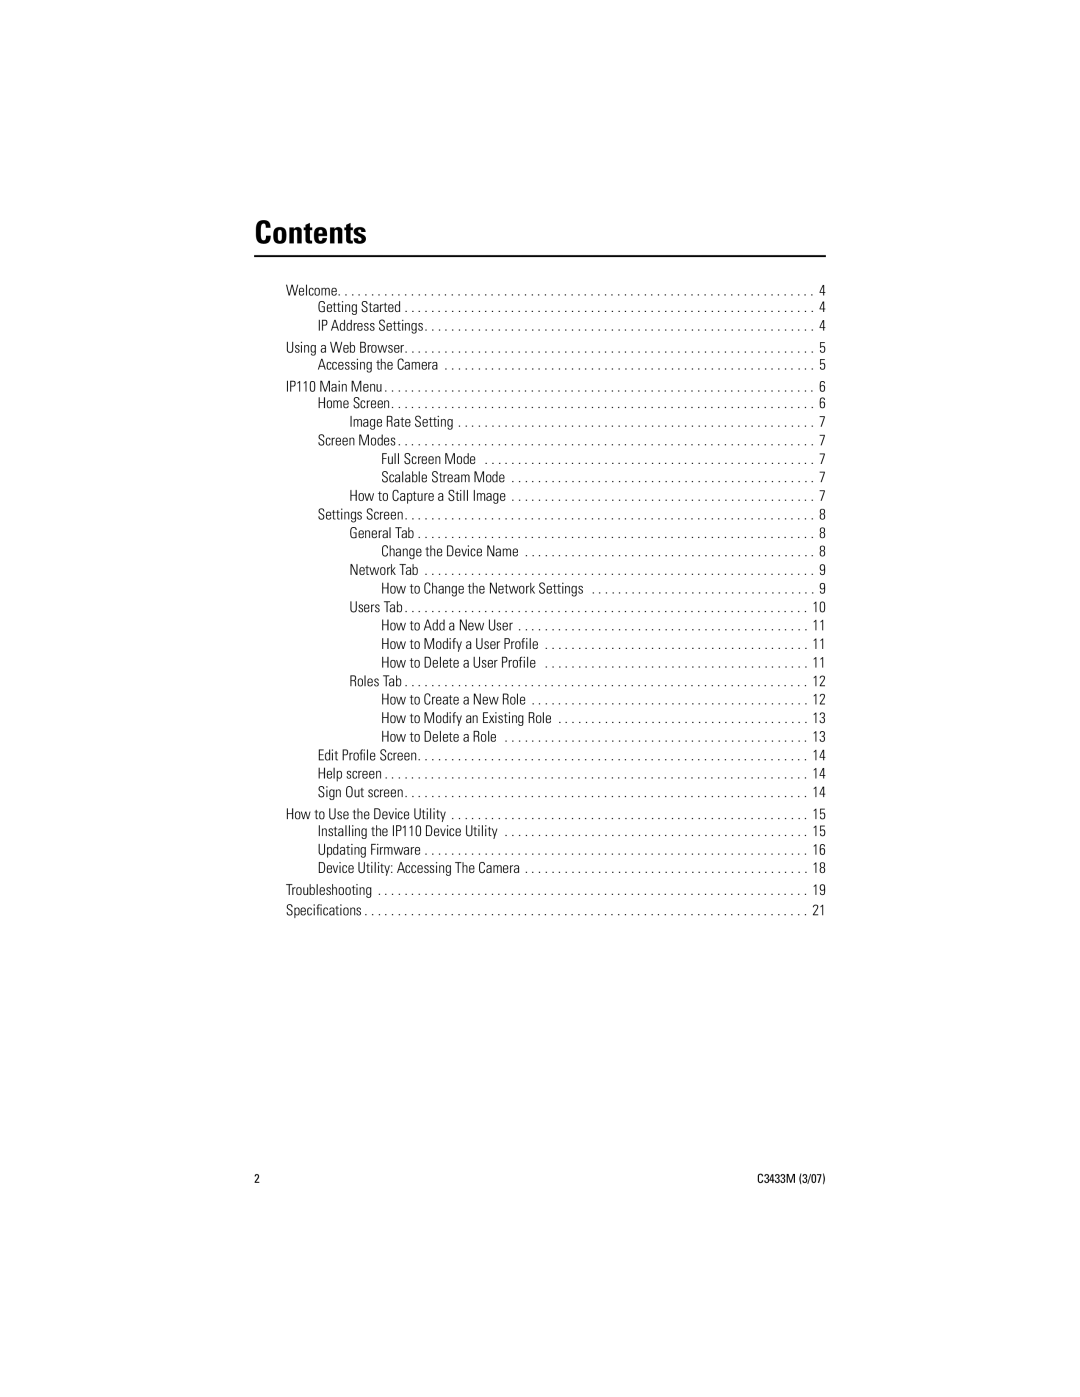 Pelco C3433M (3/07) manual Contents 